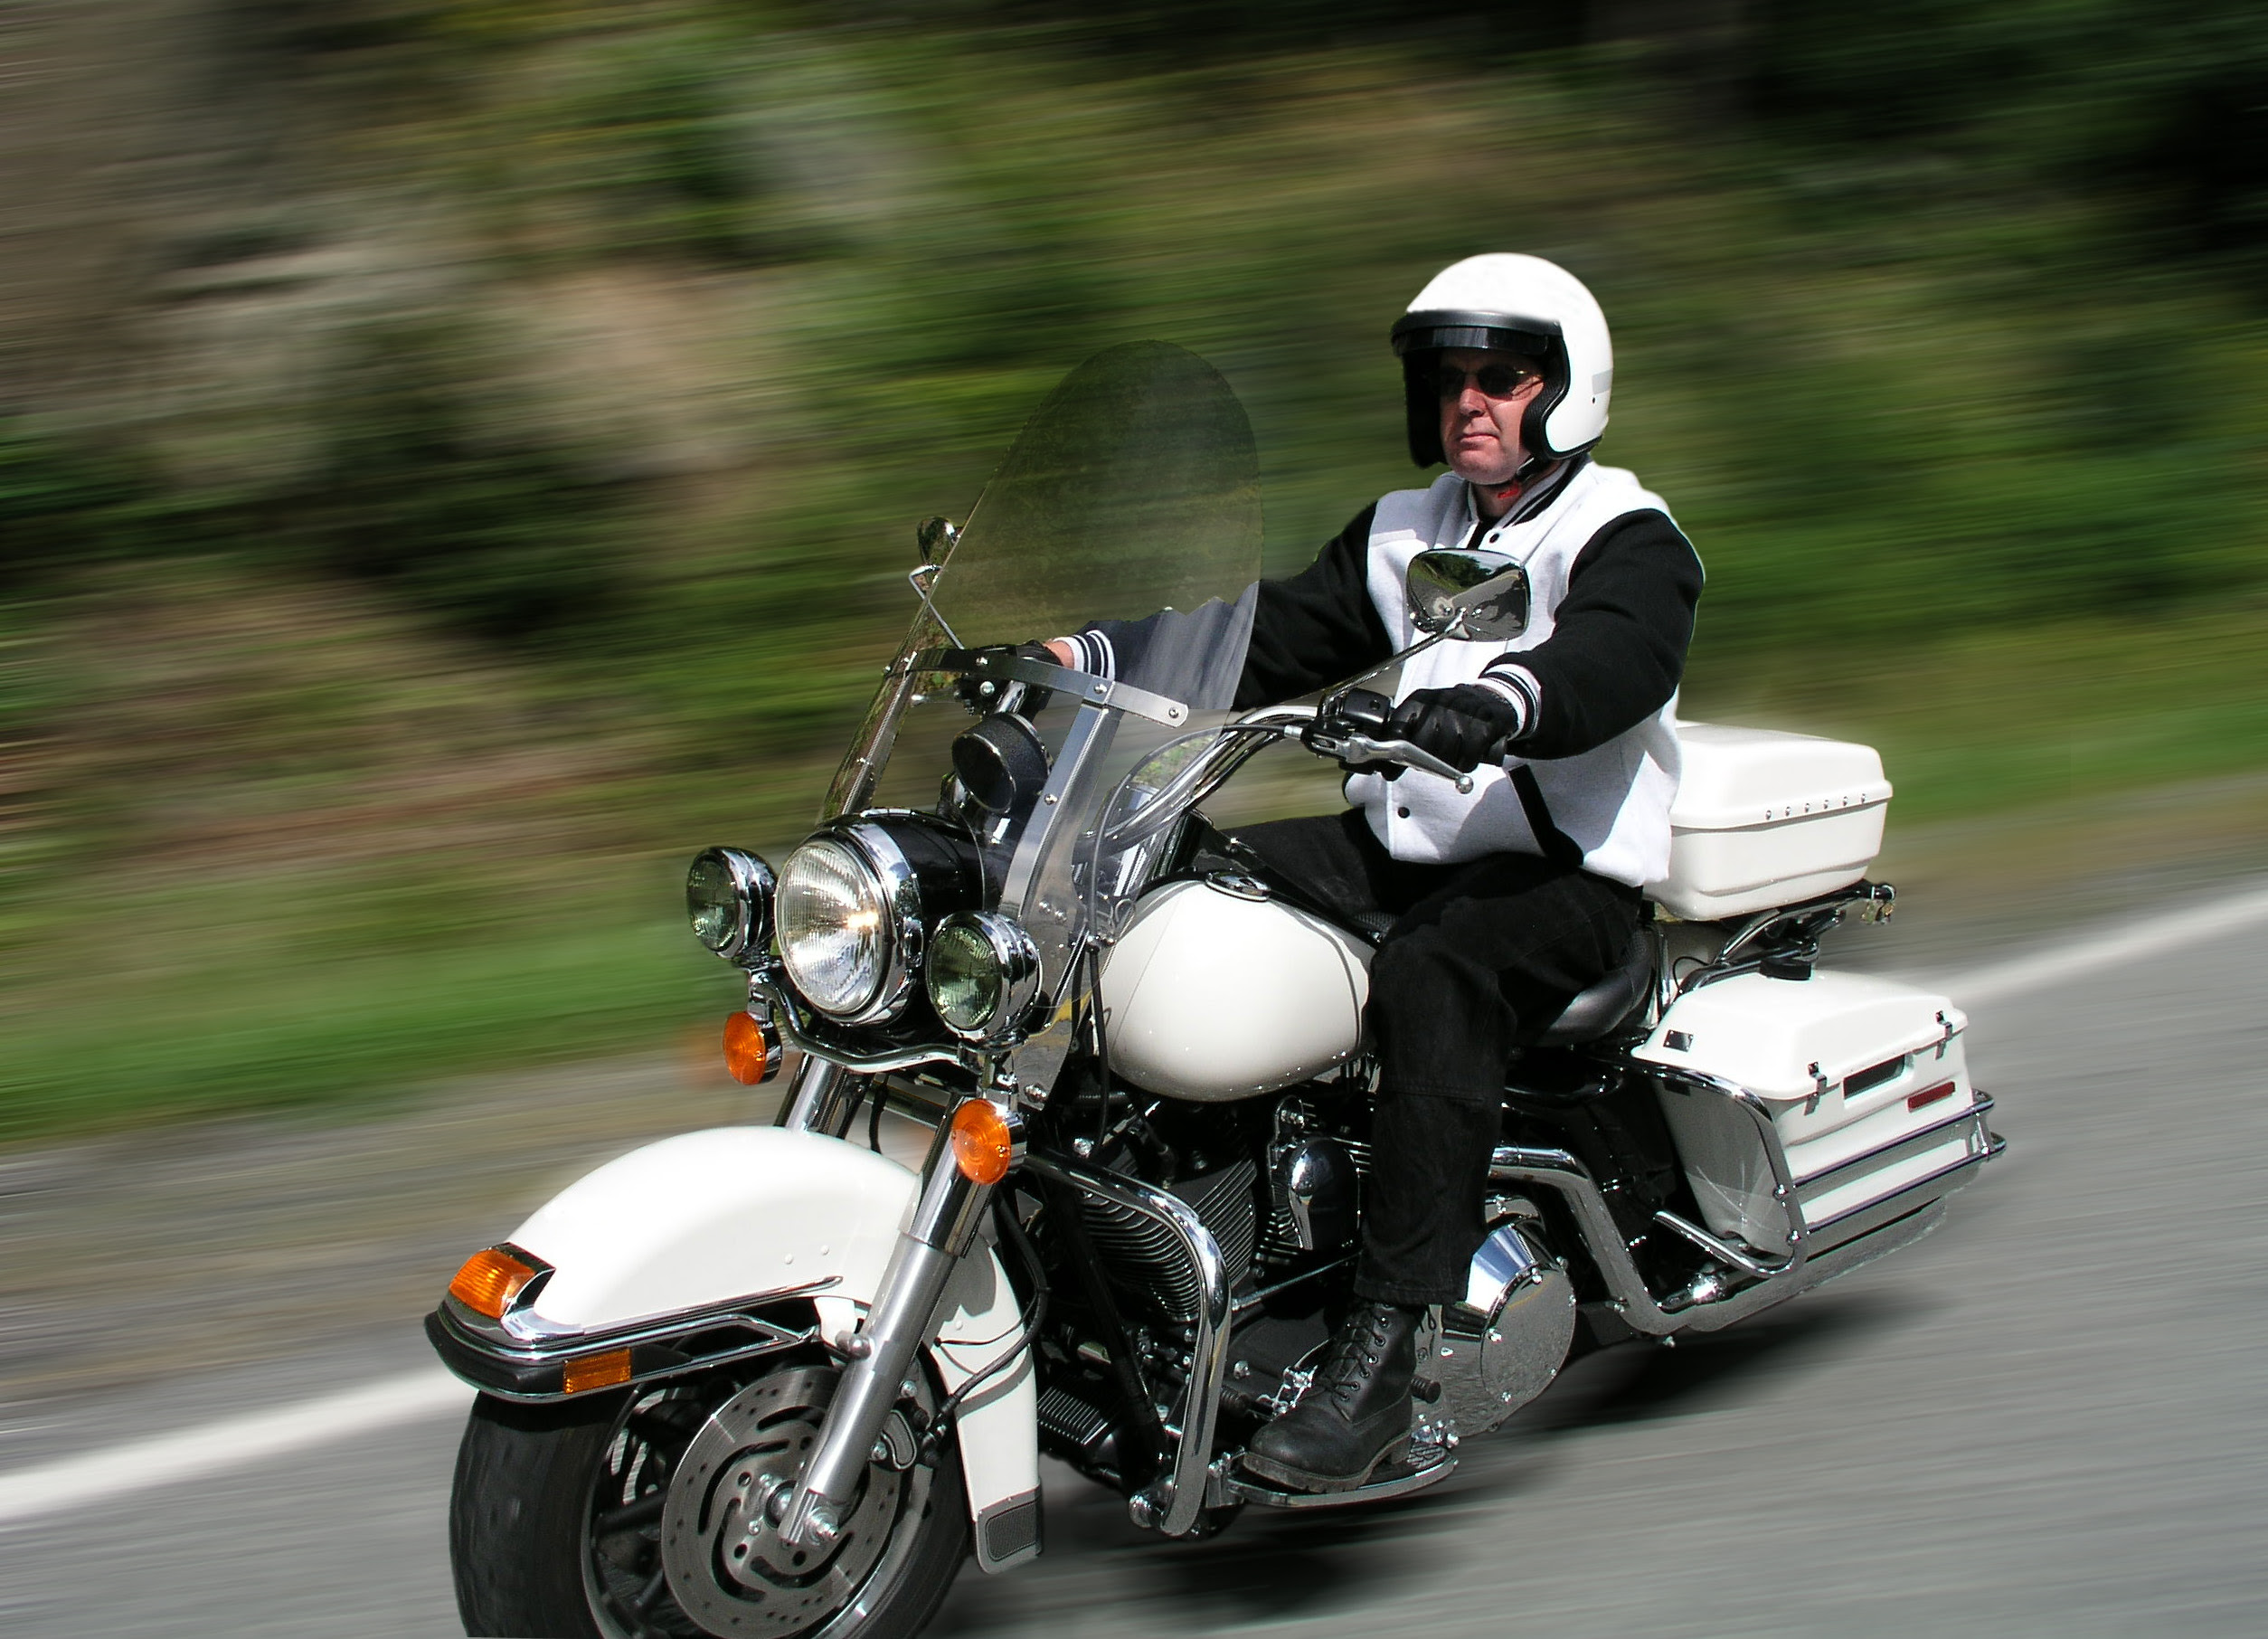 Motorcycle Insurance Online Get Tips On Safe Riding Get Motorcycle Insurance Quotes Free And Online.